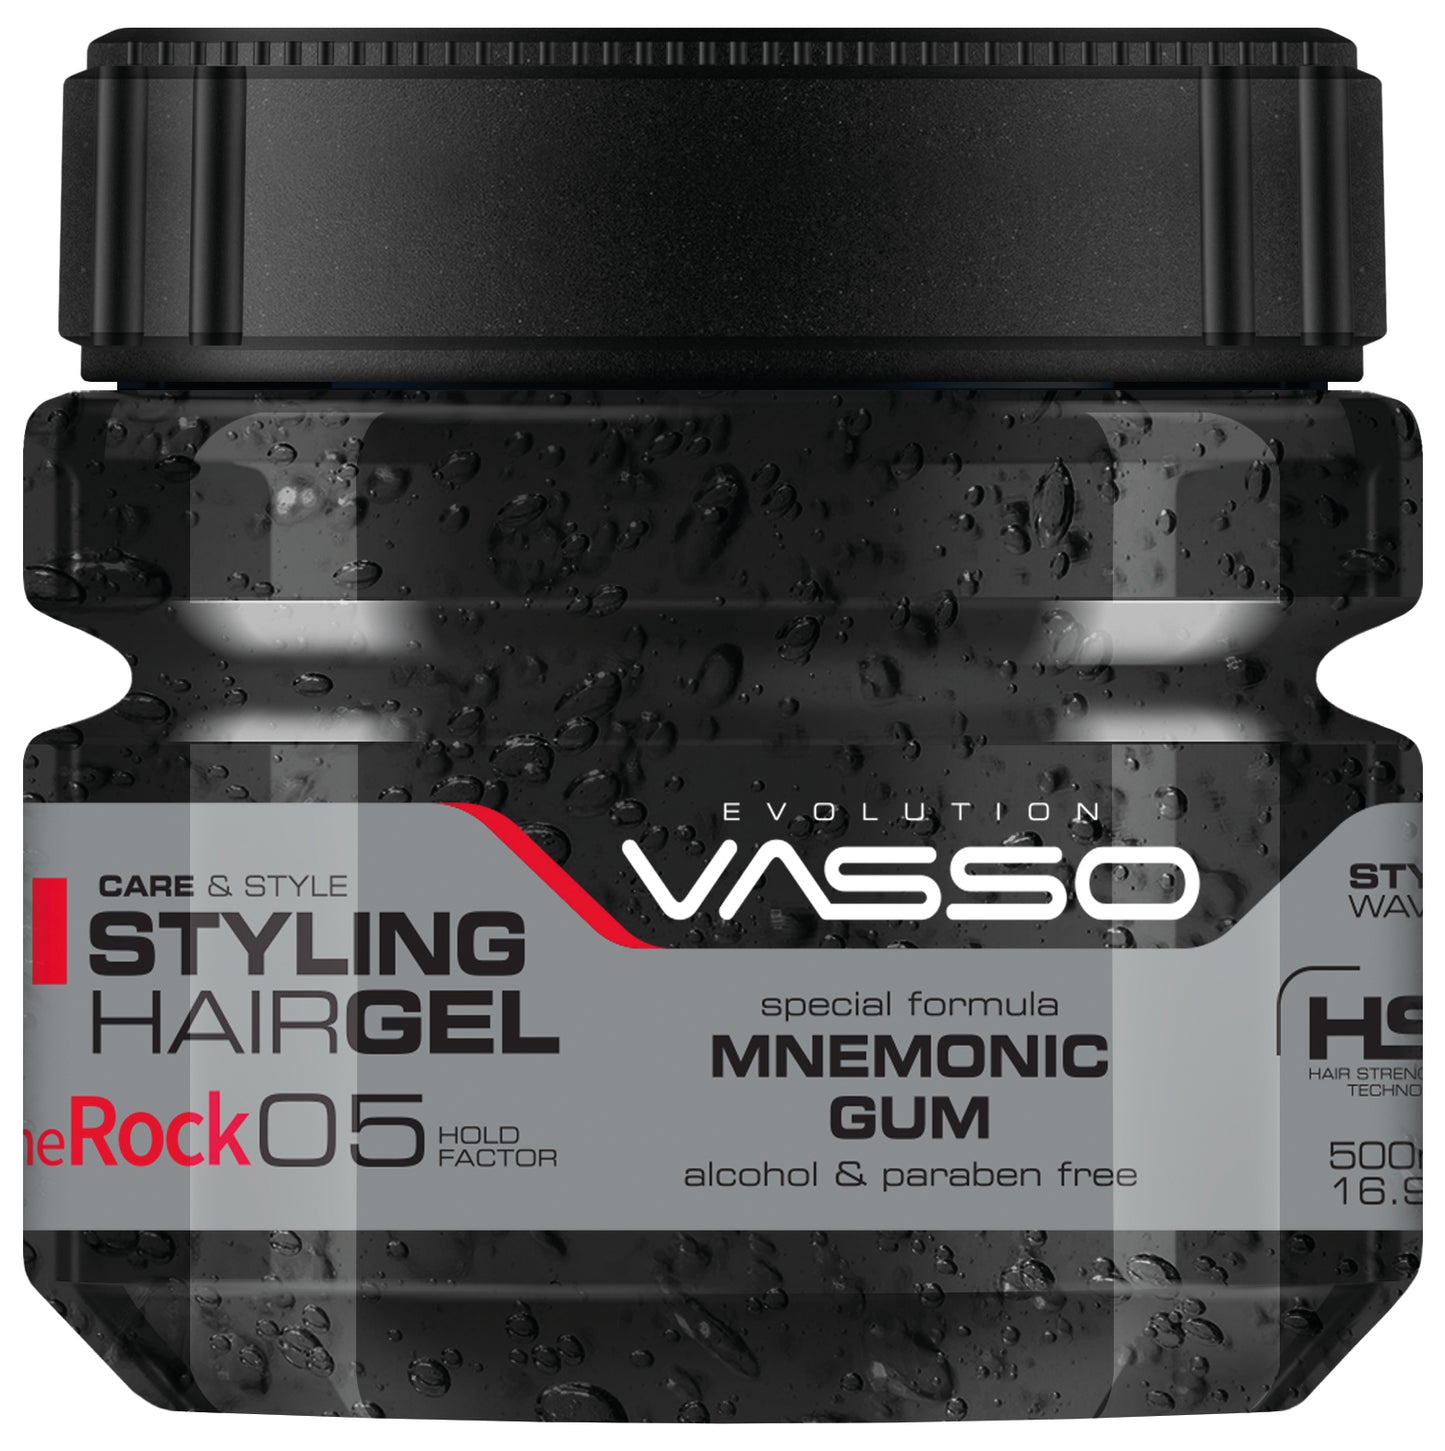 VASSO MNEMONIC STYLING GUM (THE ROCK)